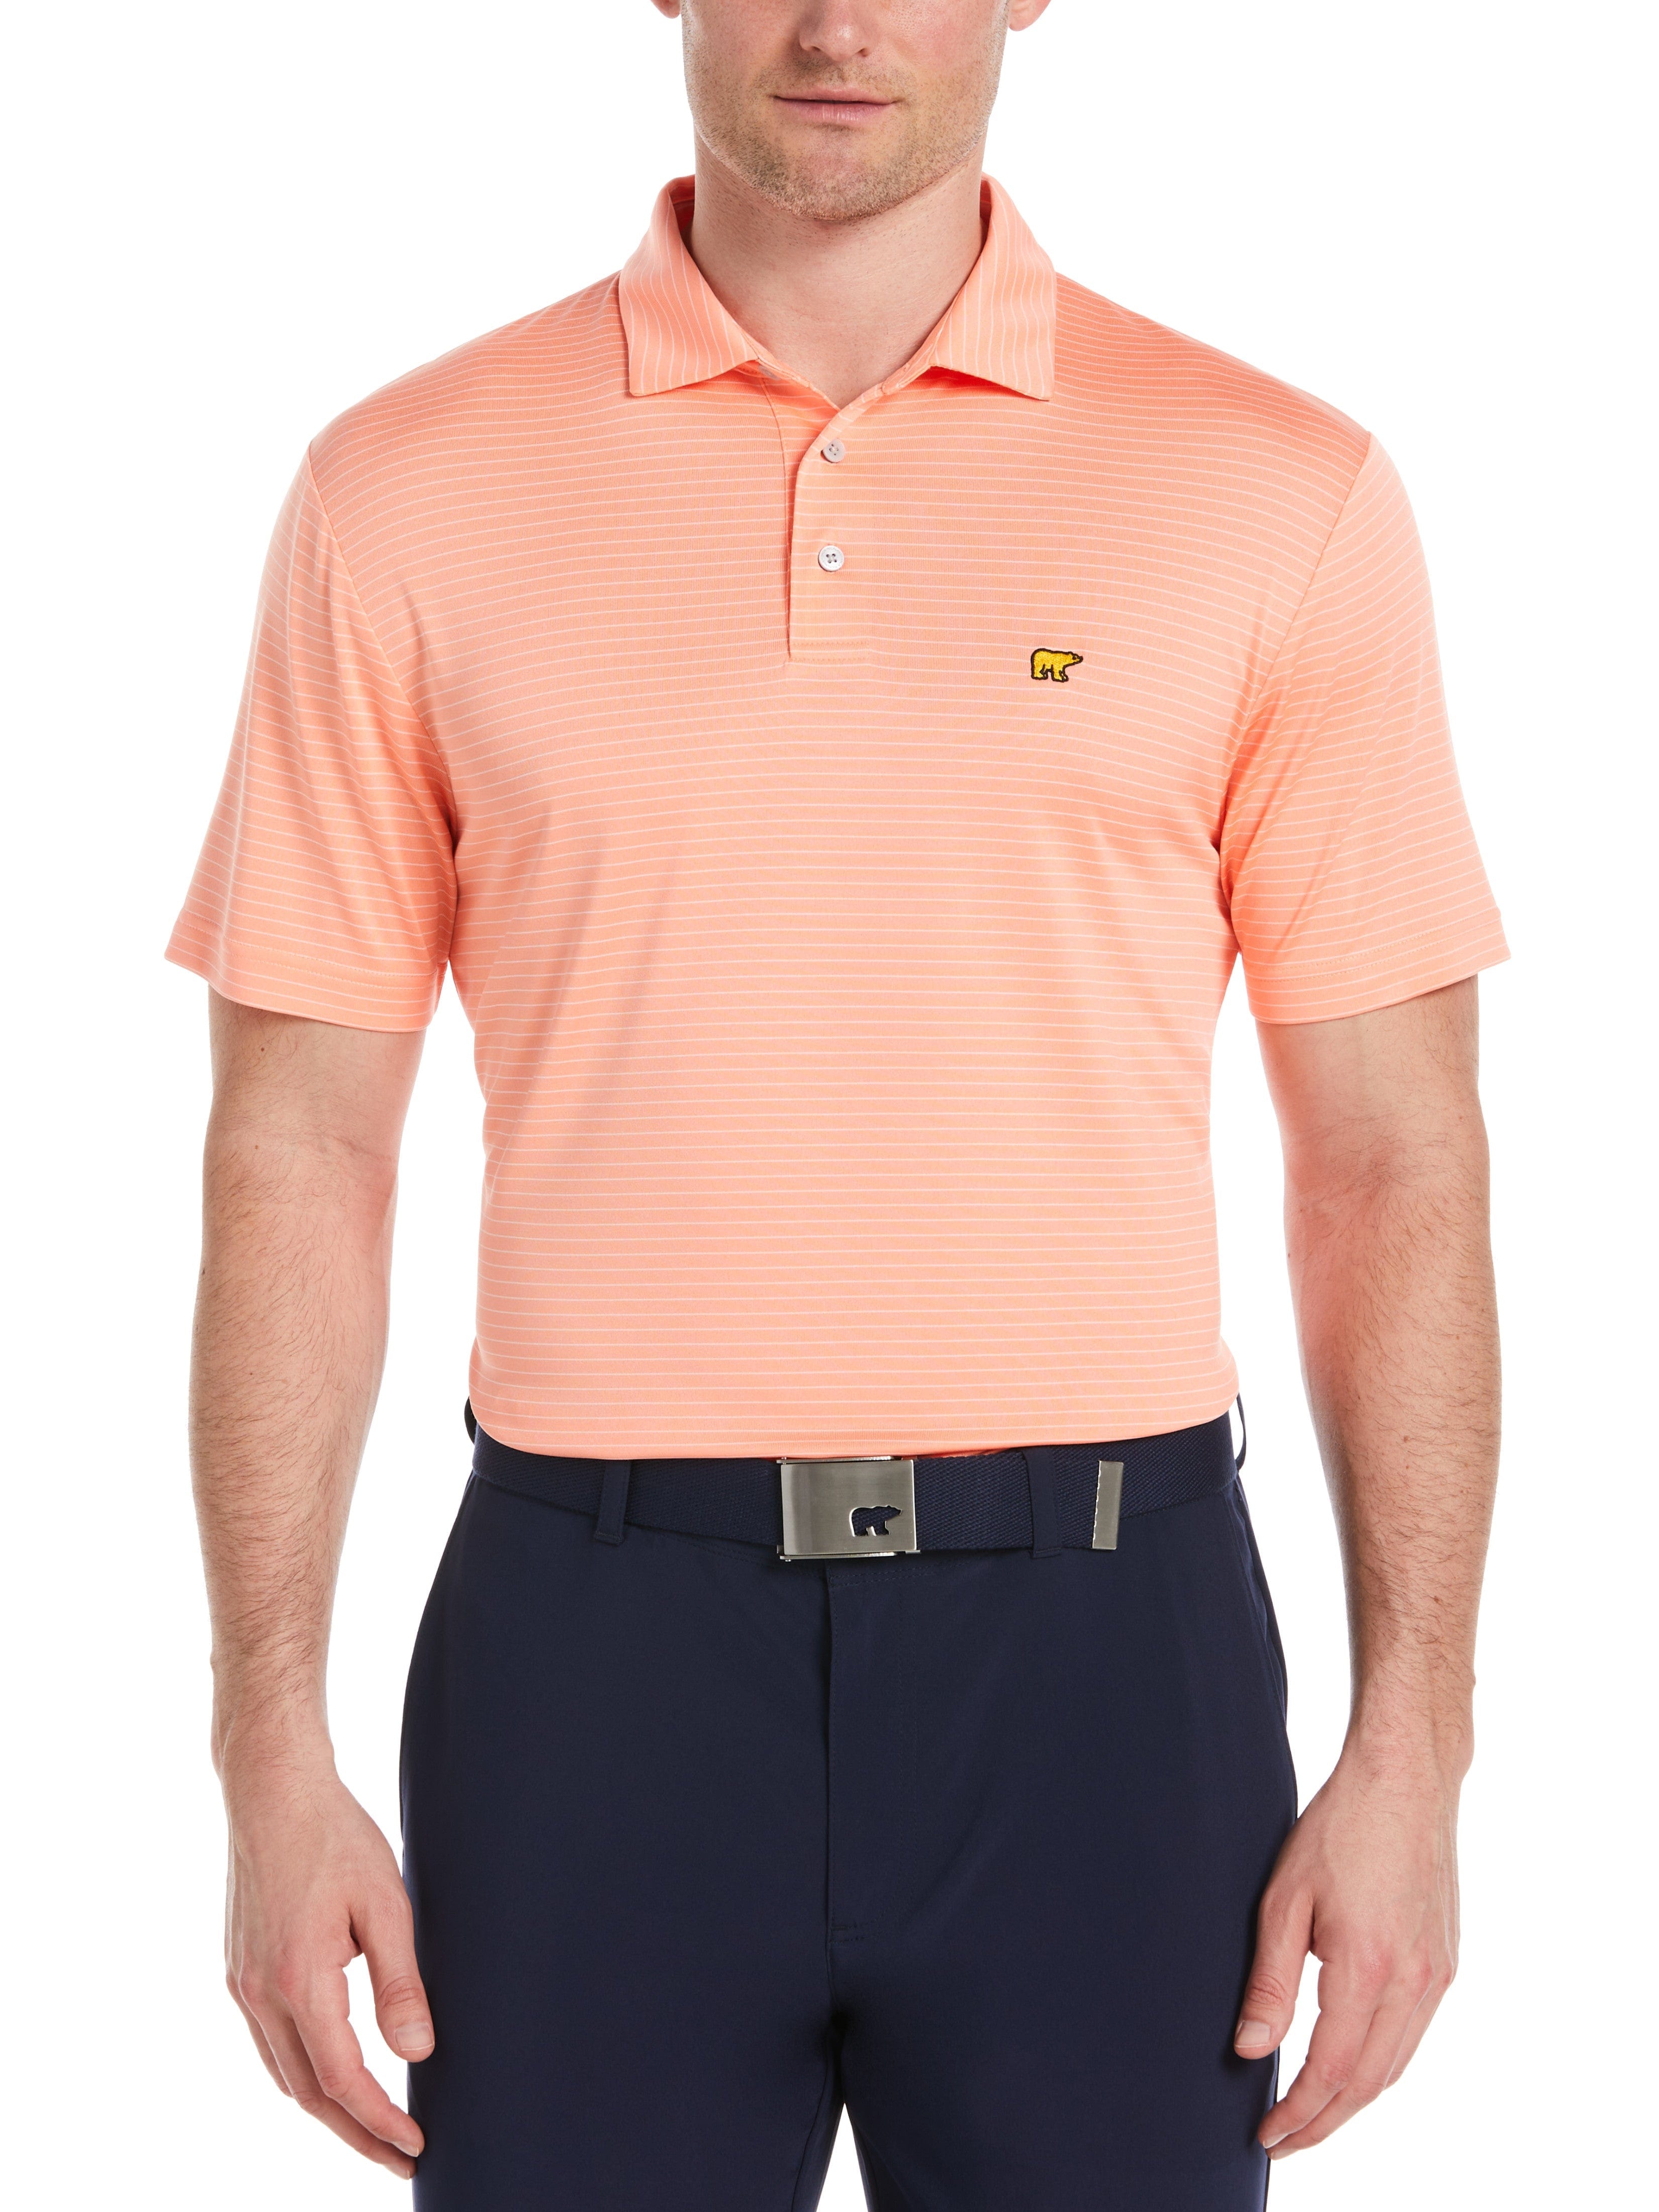 Jack Nicklaus Mens Two Color Stripe Golf Polo Shirt, Size XL, Desert Flower Pink, 100% Polyester | Golf Apparel Shop